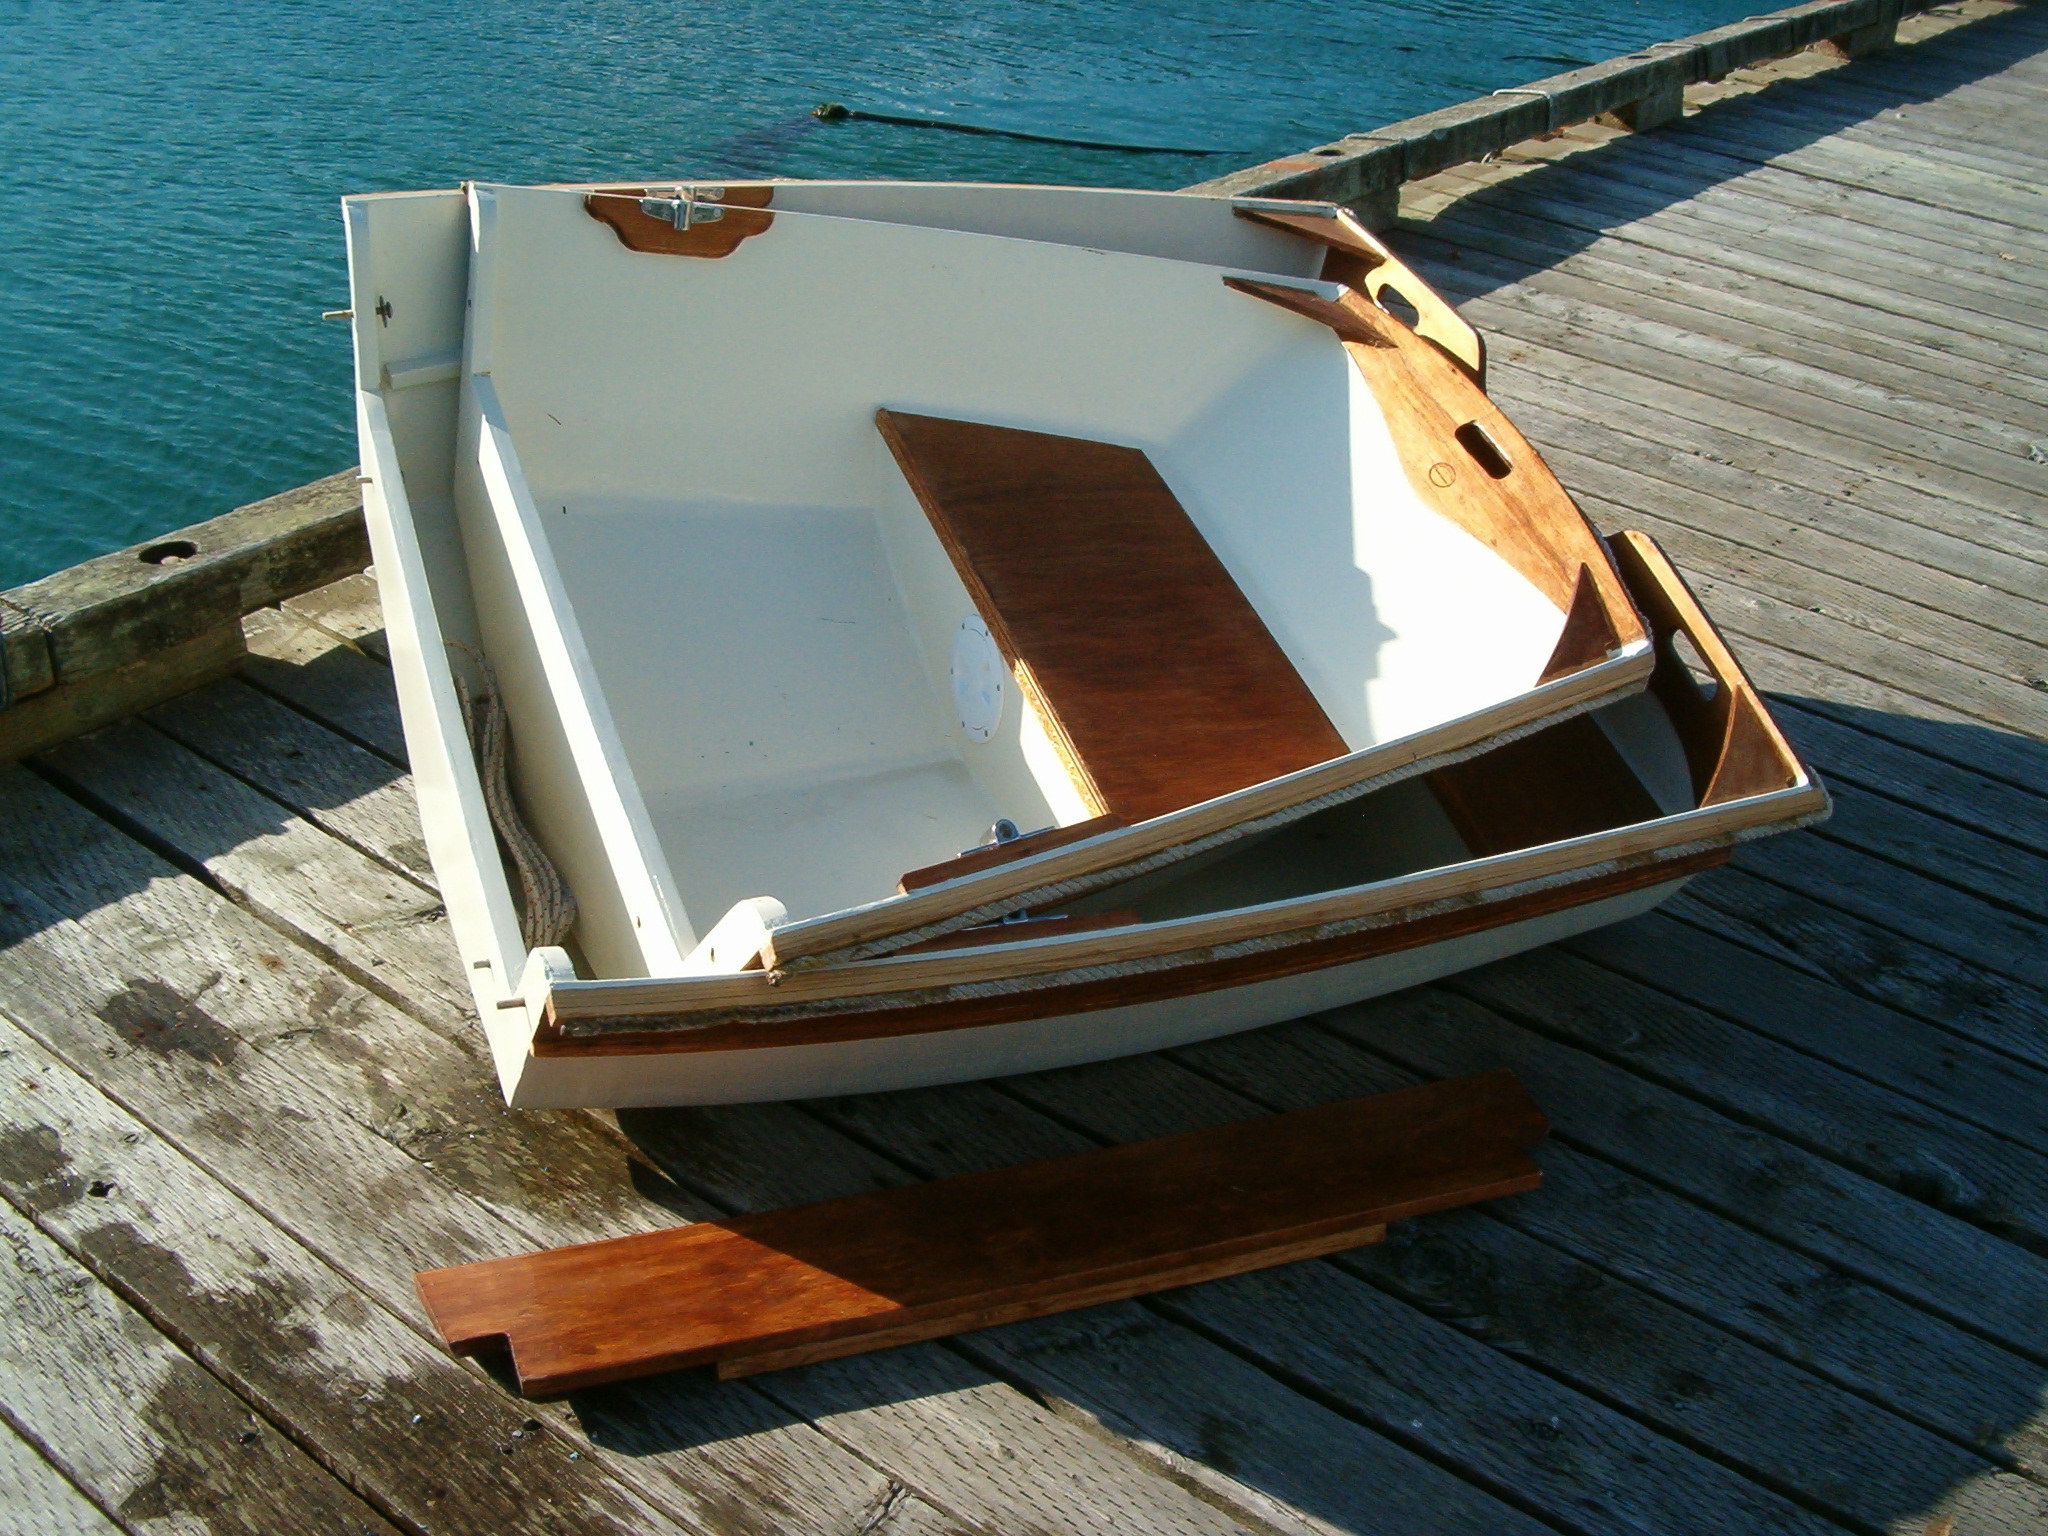 Building a pram dinghy ~ Go boating